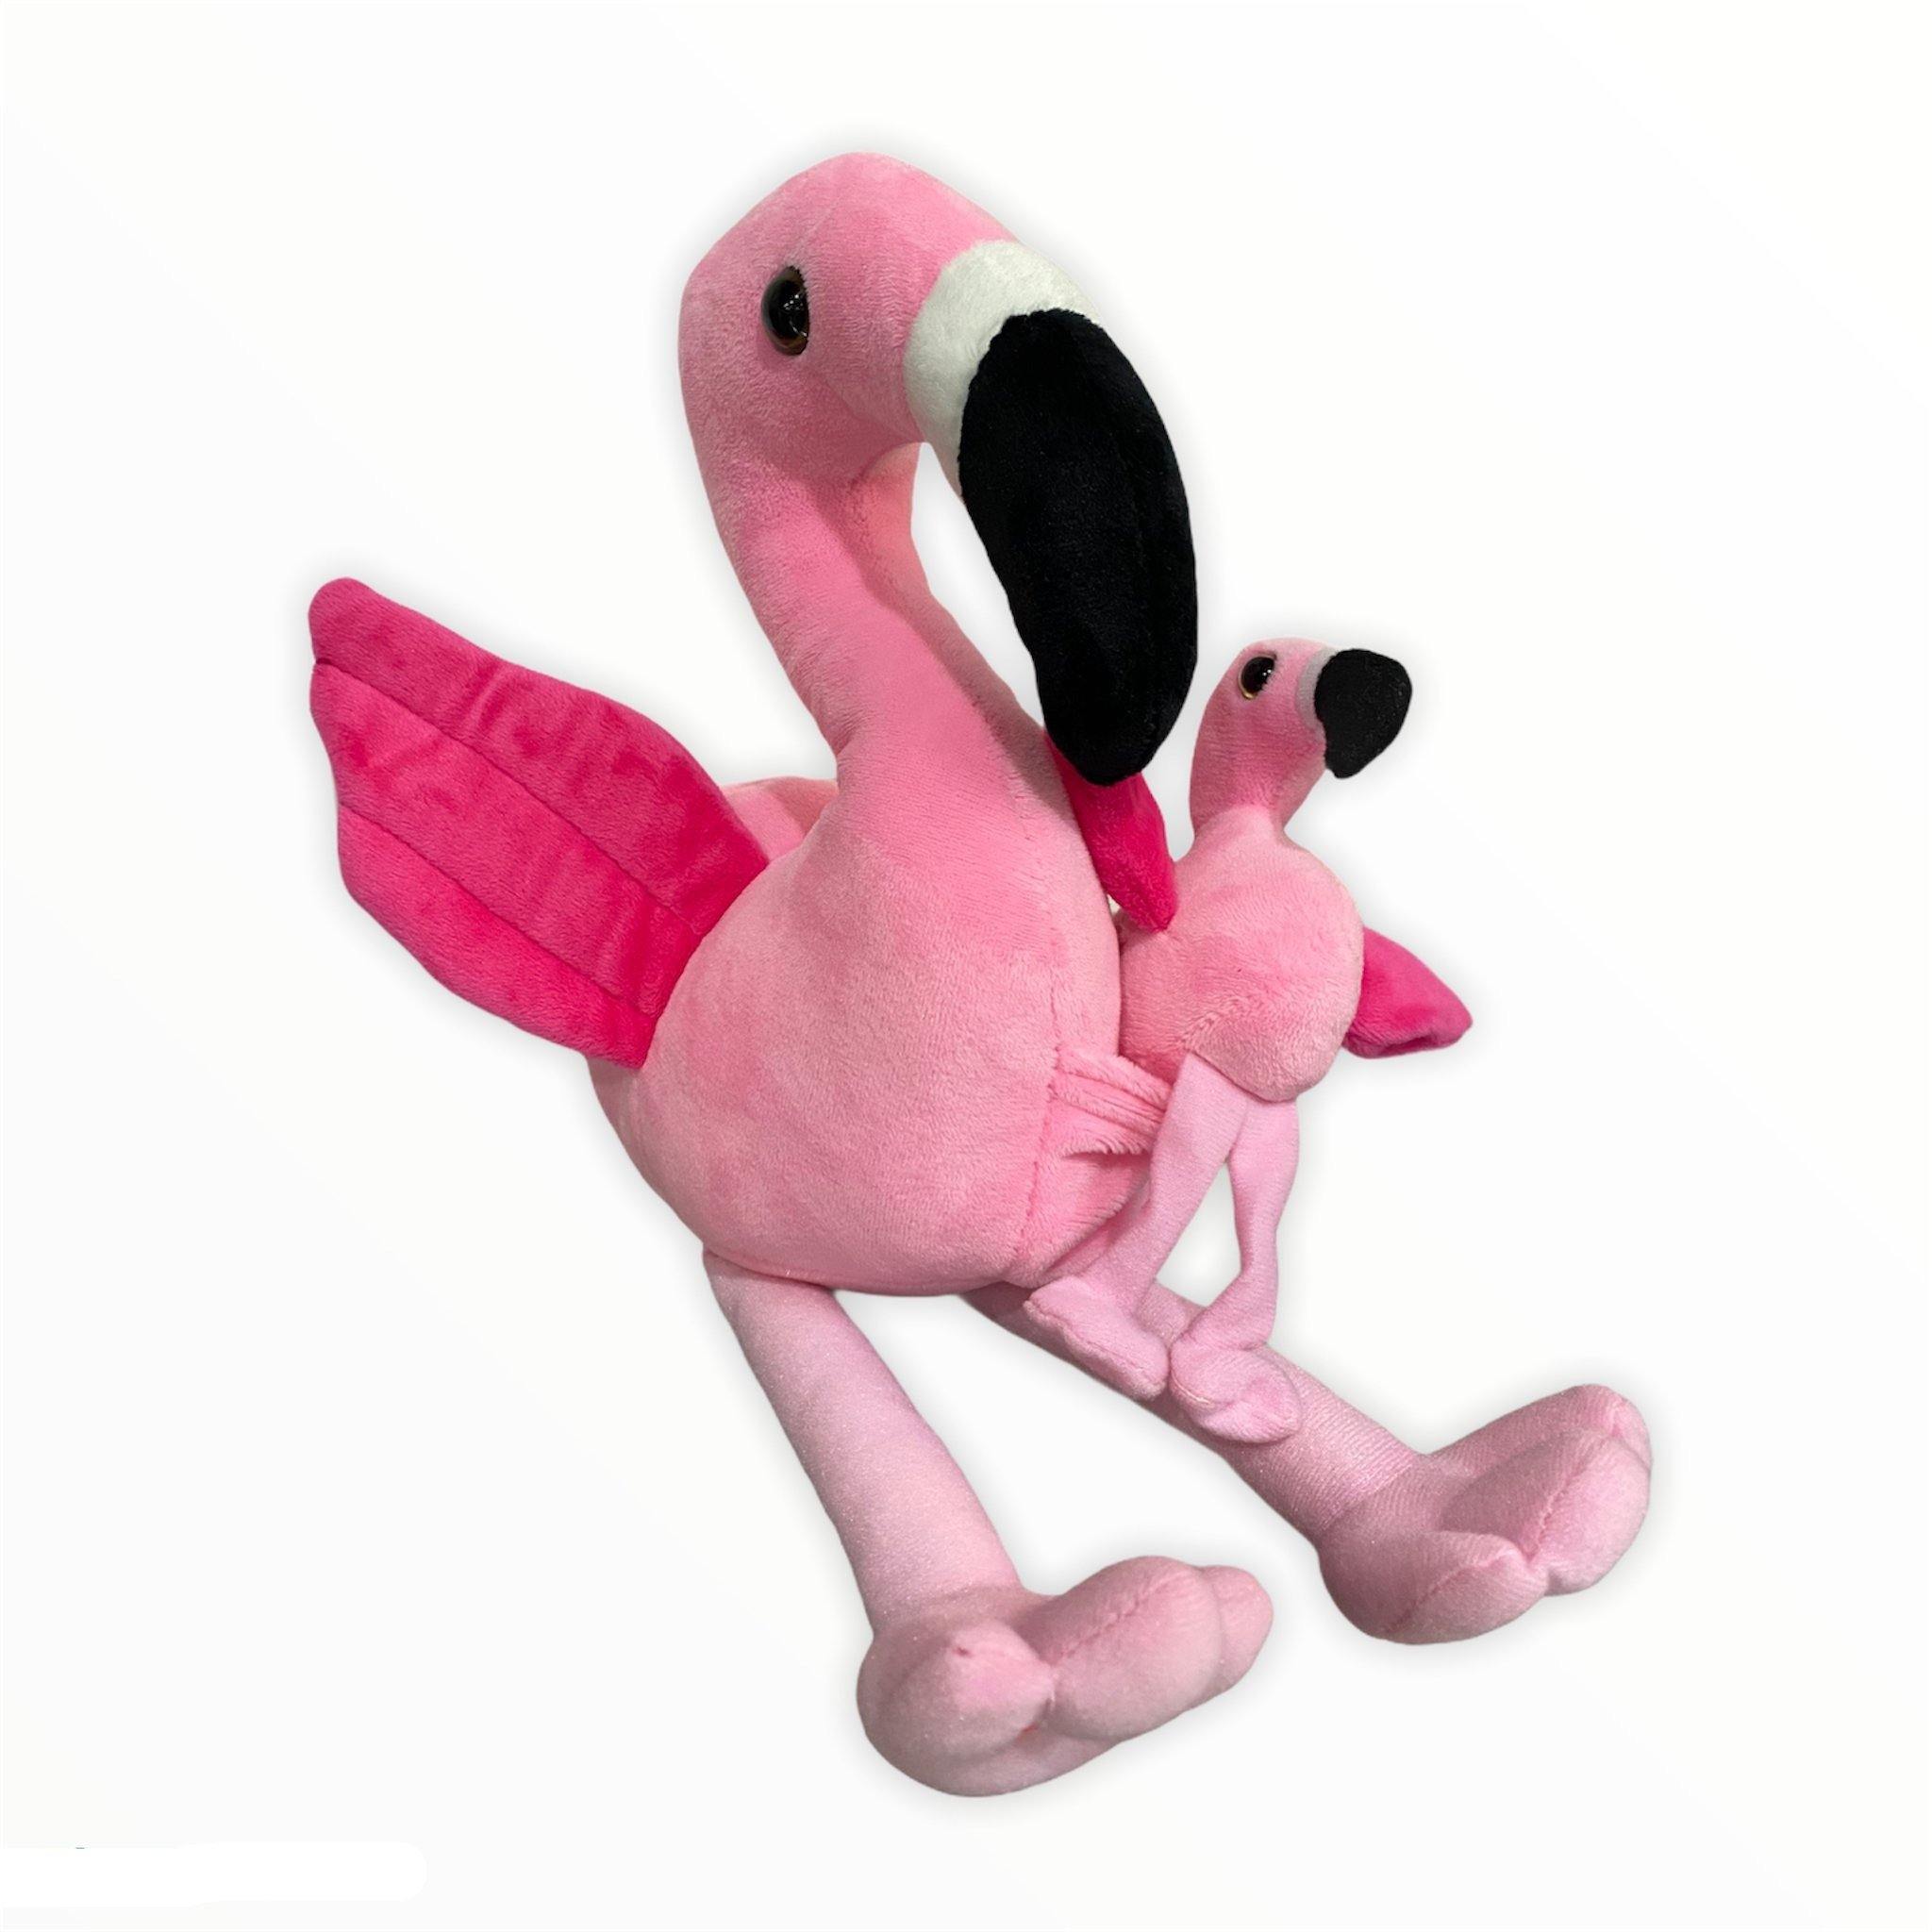 Fun Stuff Plush Toy Soft Stuffed Flamingo